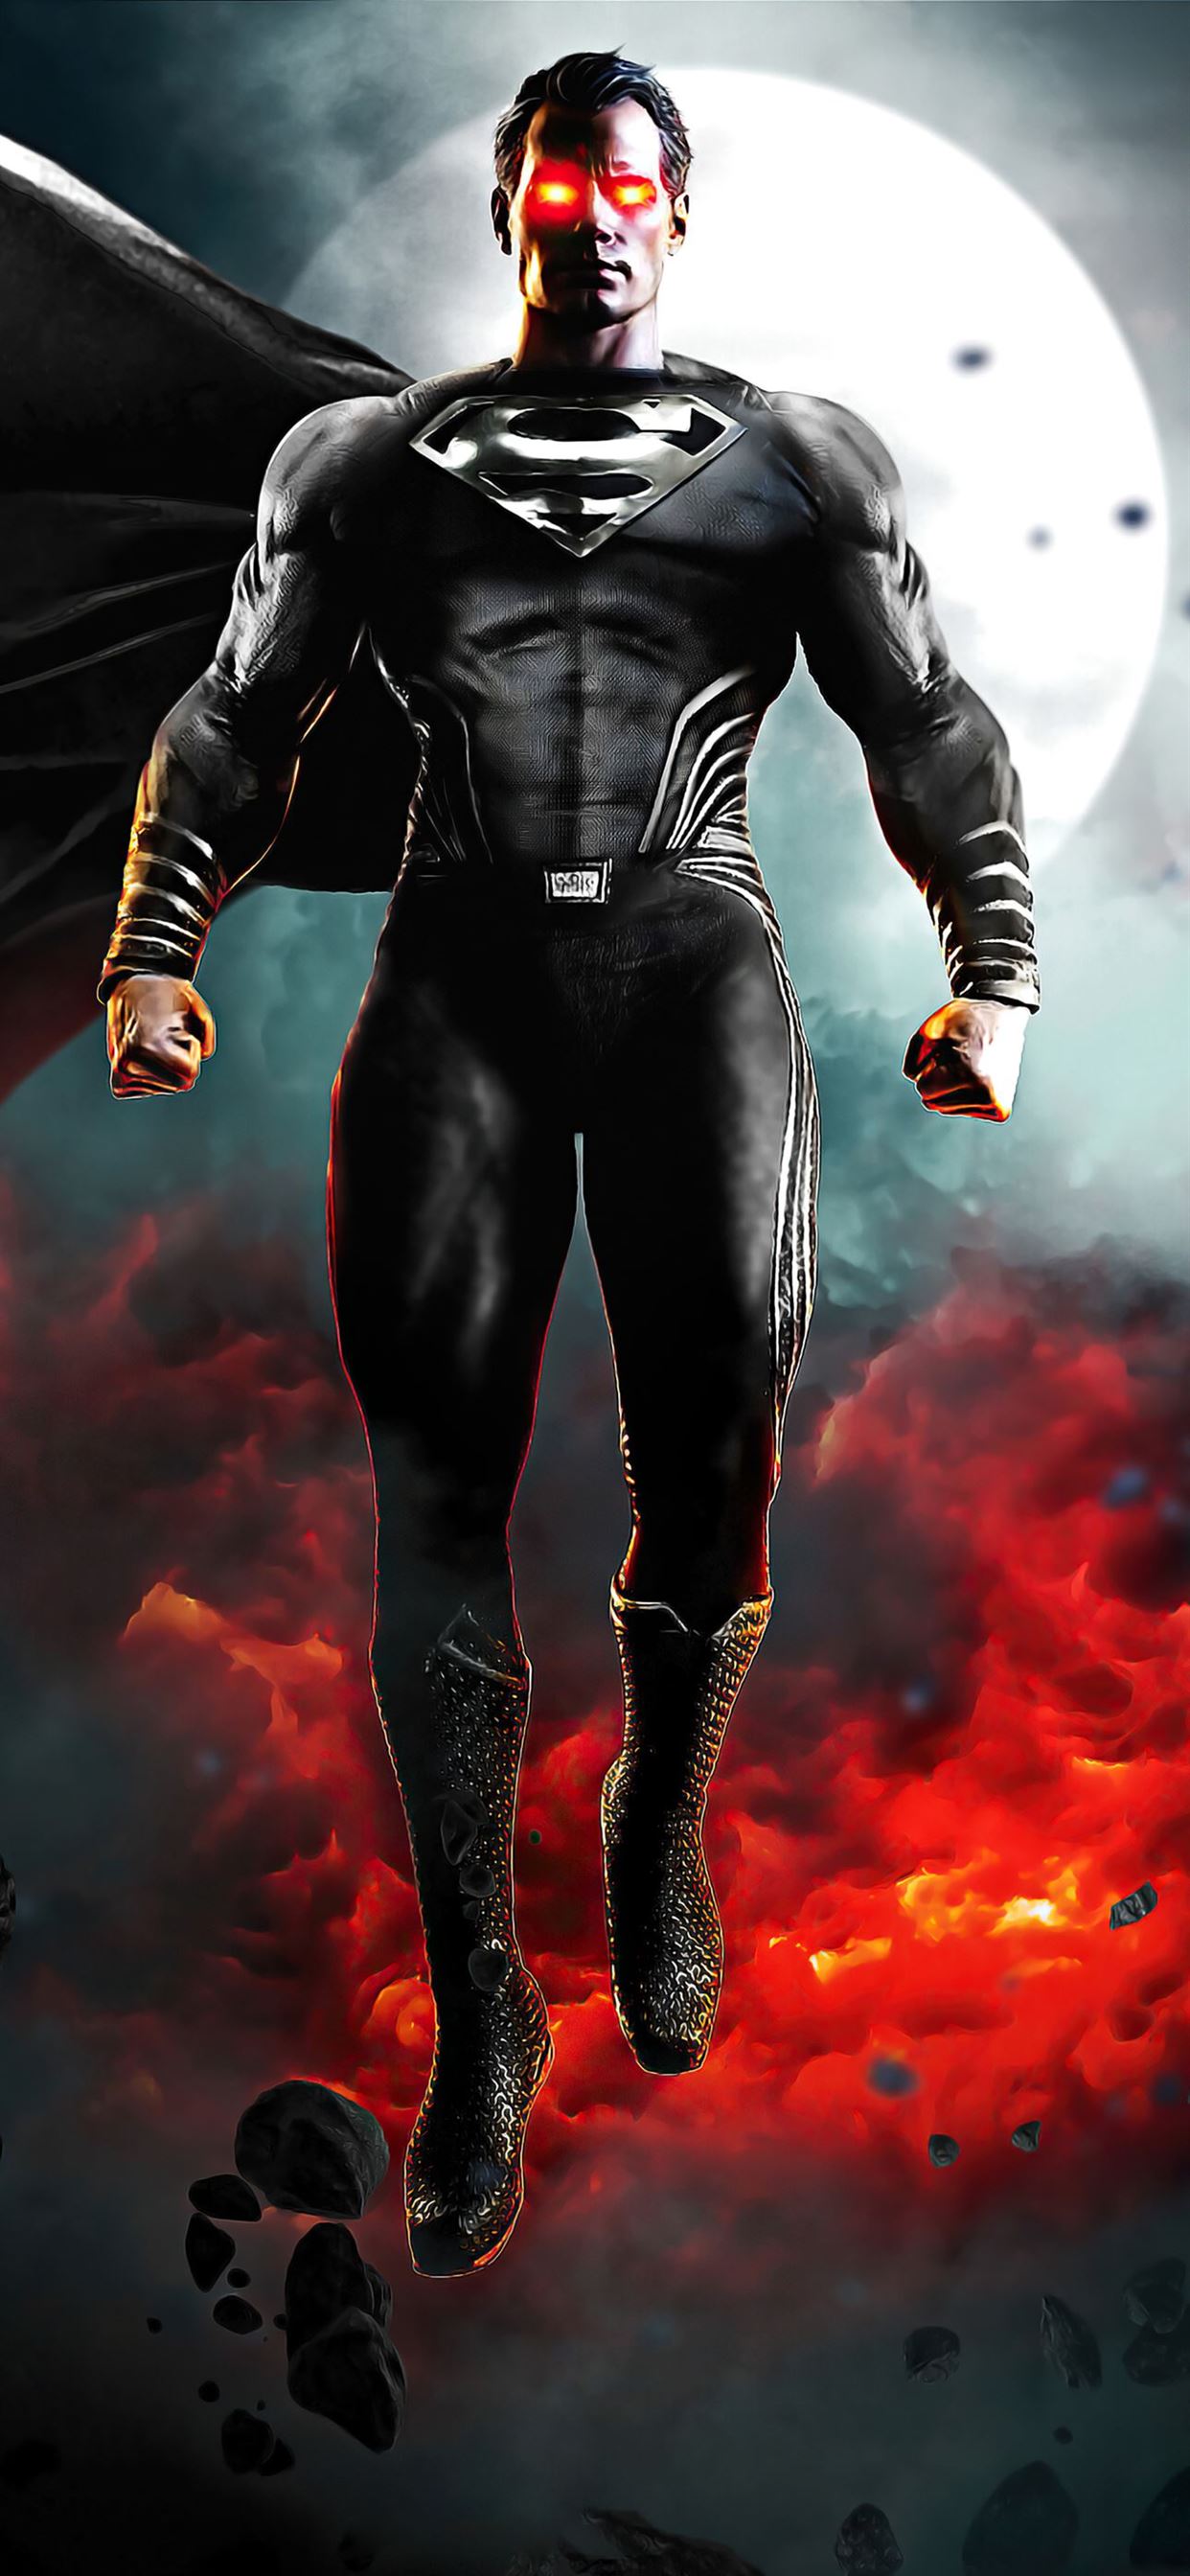 zack-synder-justice-league-black-suit-superman-4k.jpg